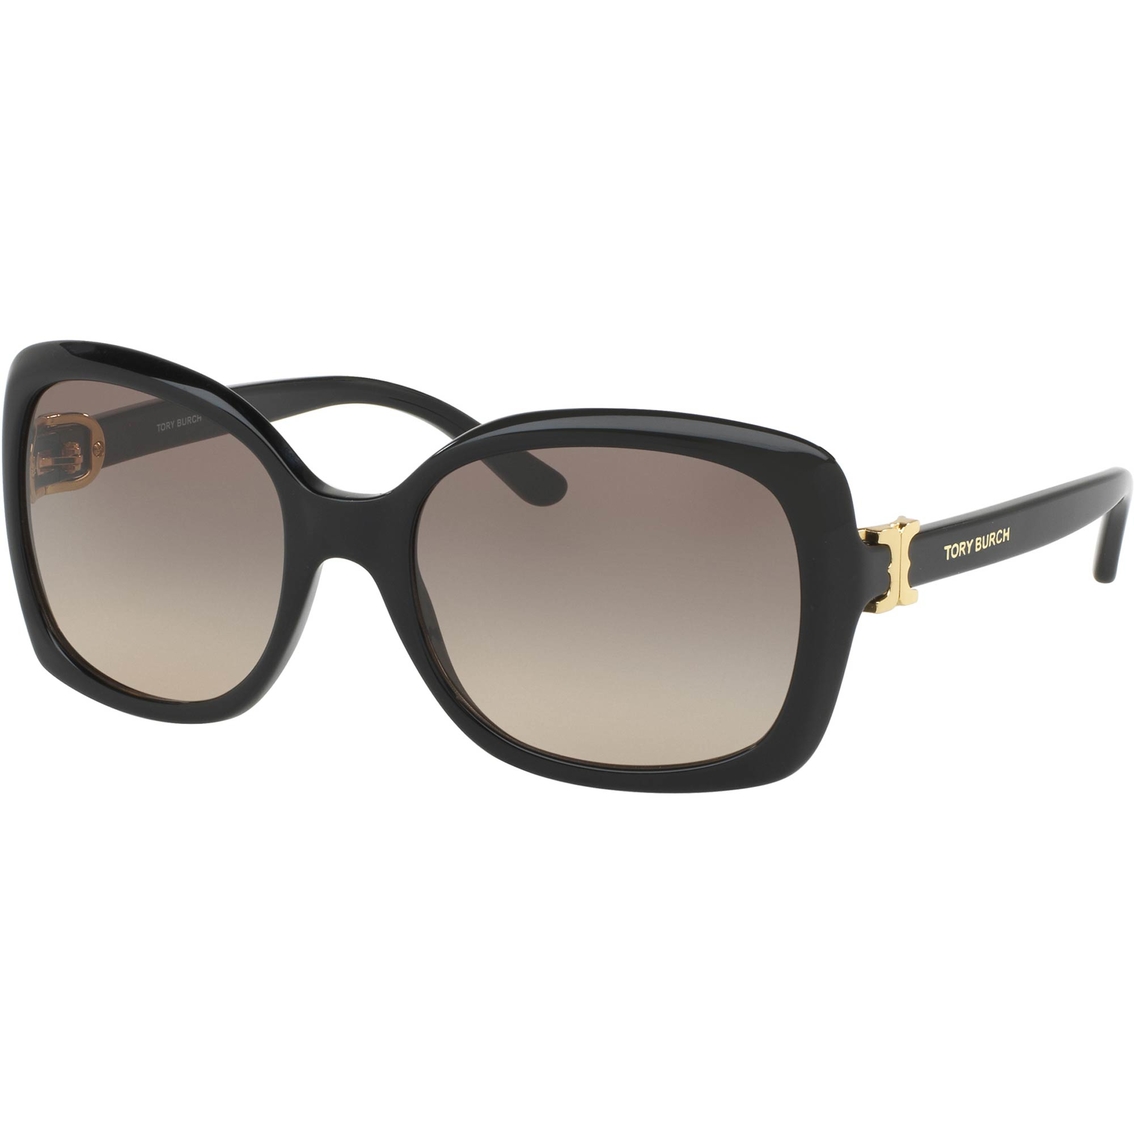 Tory Burch Rectangular Sunglasses 0ty7101 | Sunglasses | Clothing ...